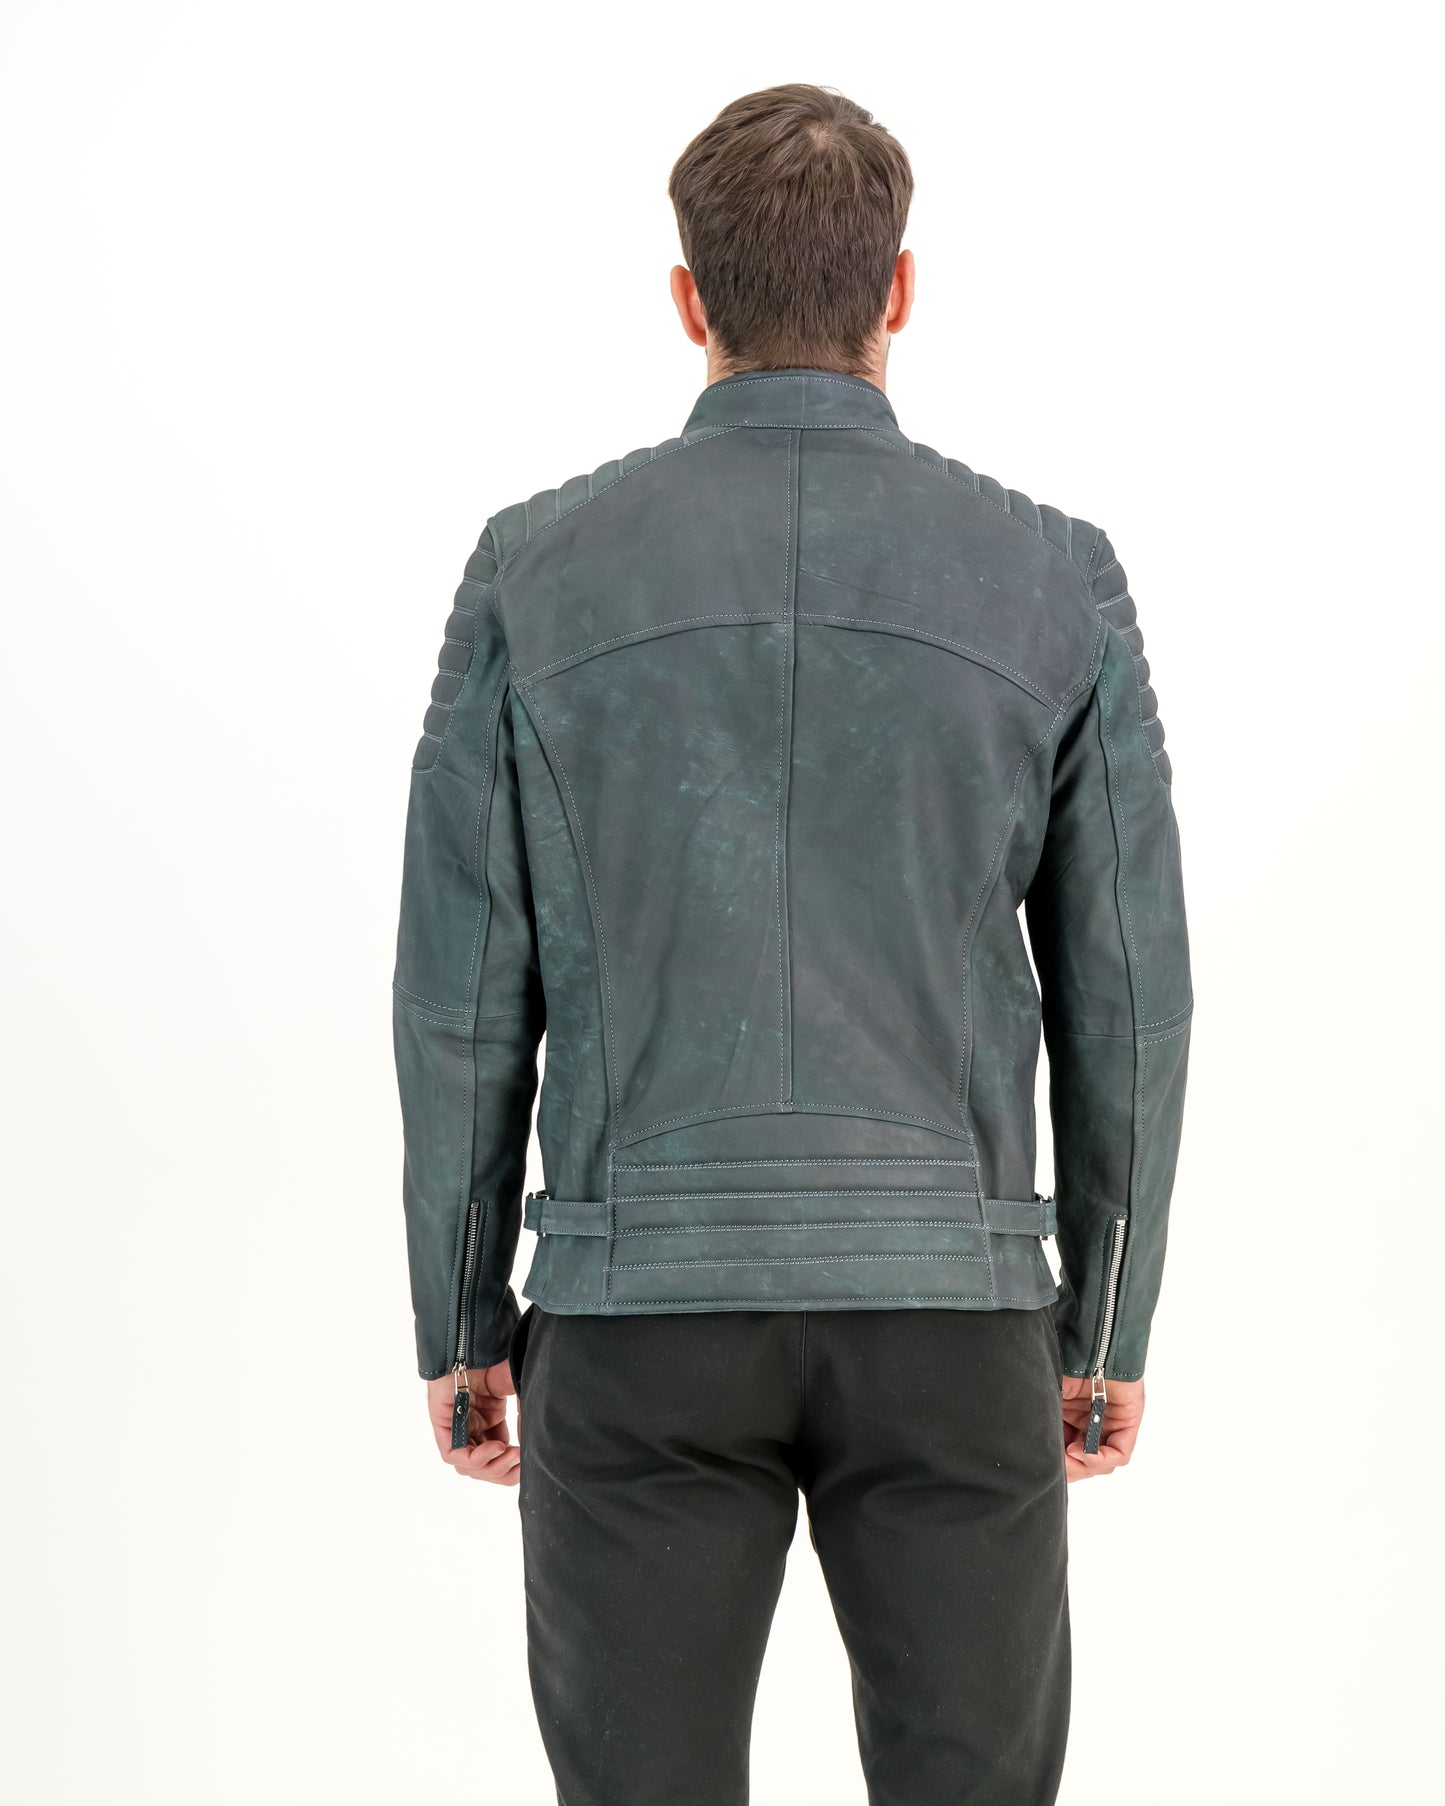 Men's Jhonny-B Olive Snuff Leather Jacket- Supreme Leather Supreme Leather